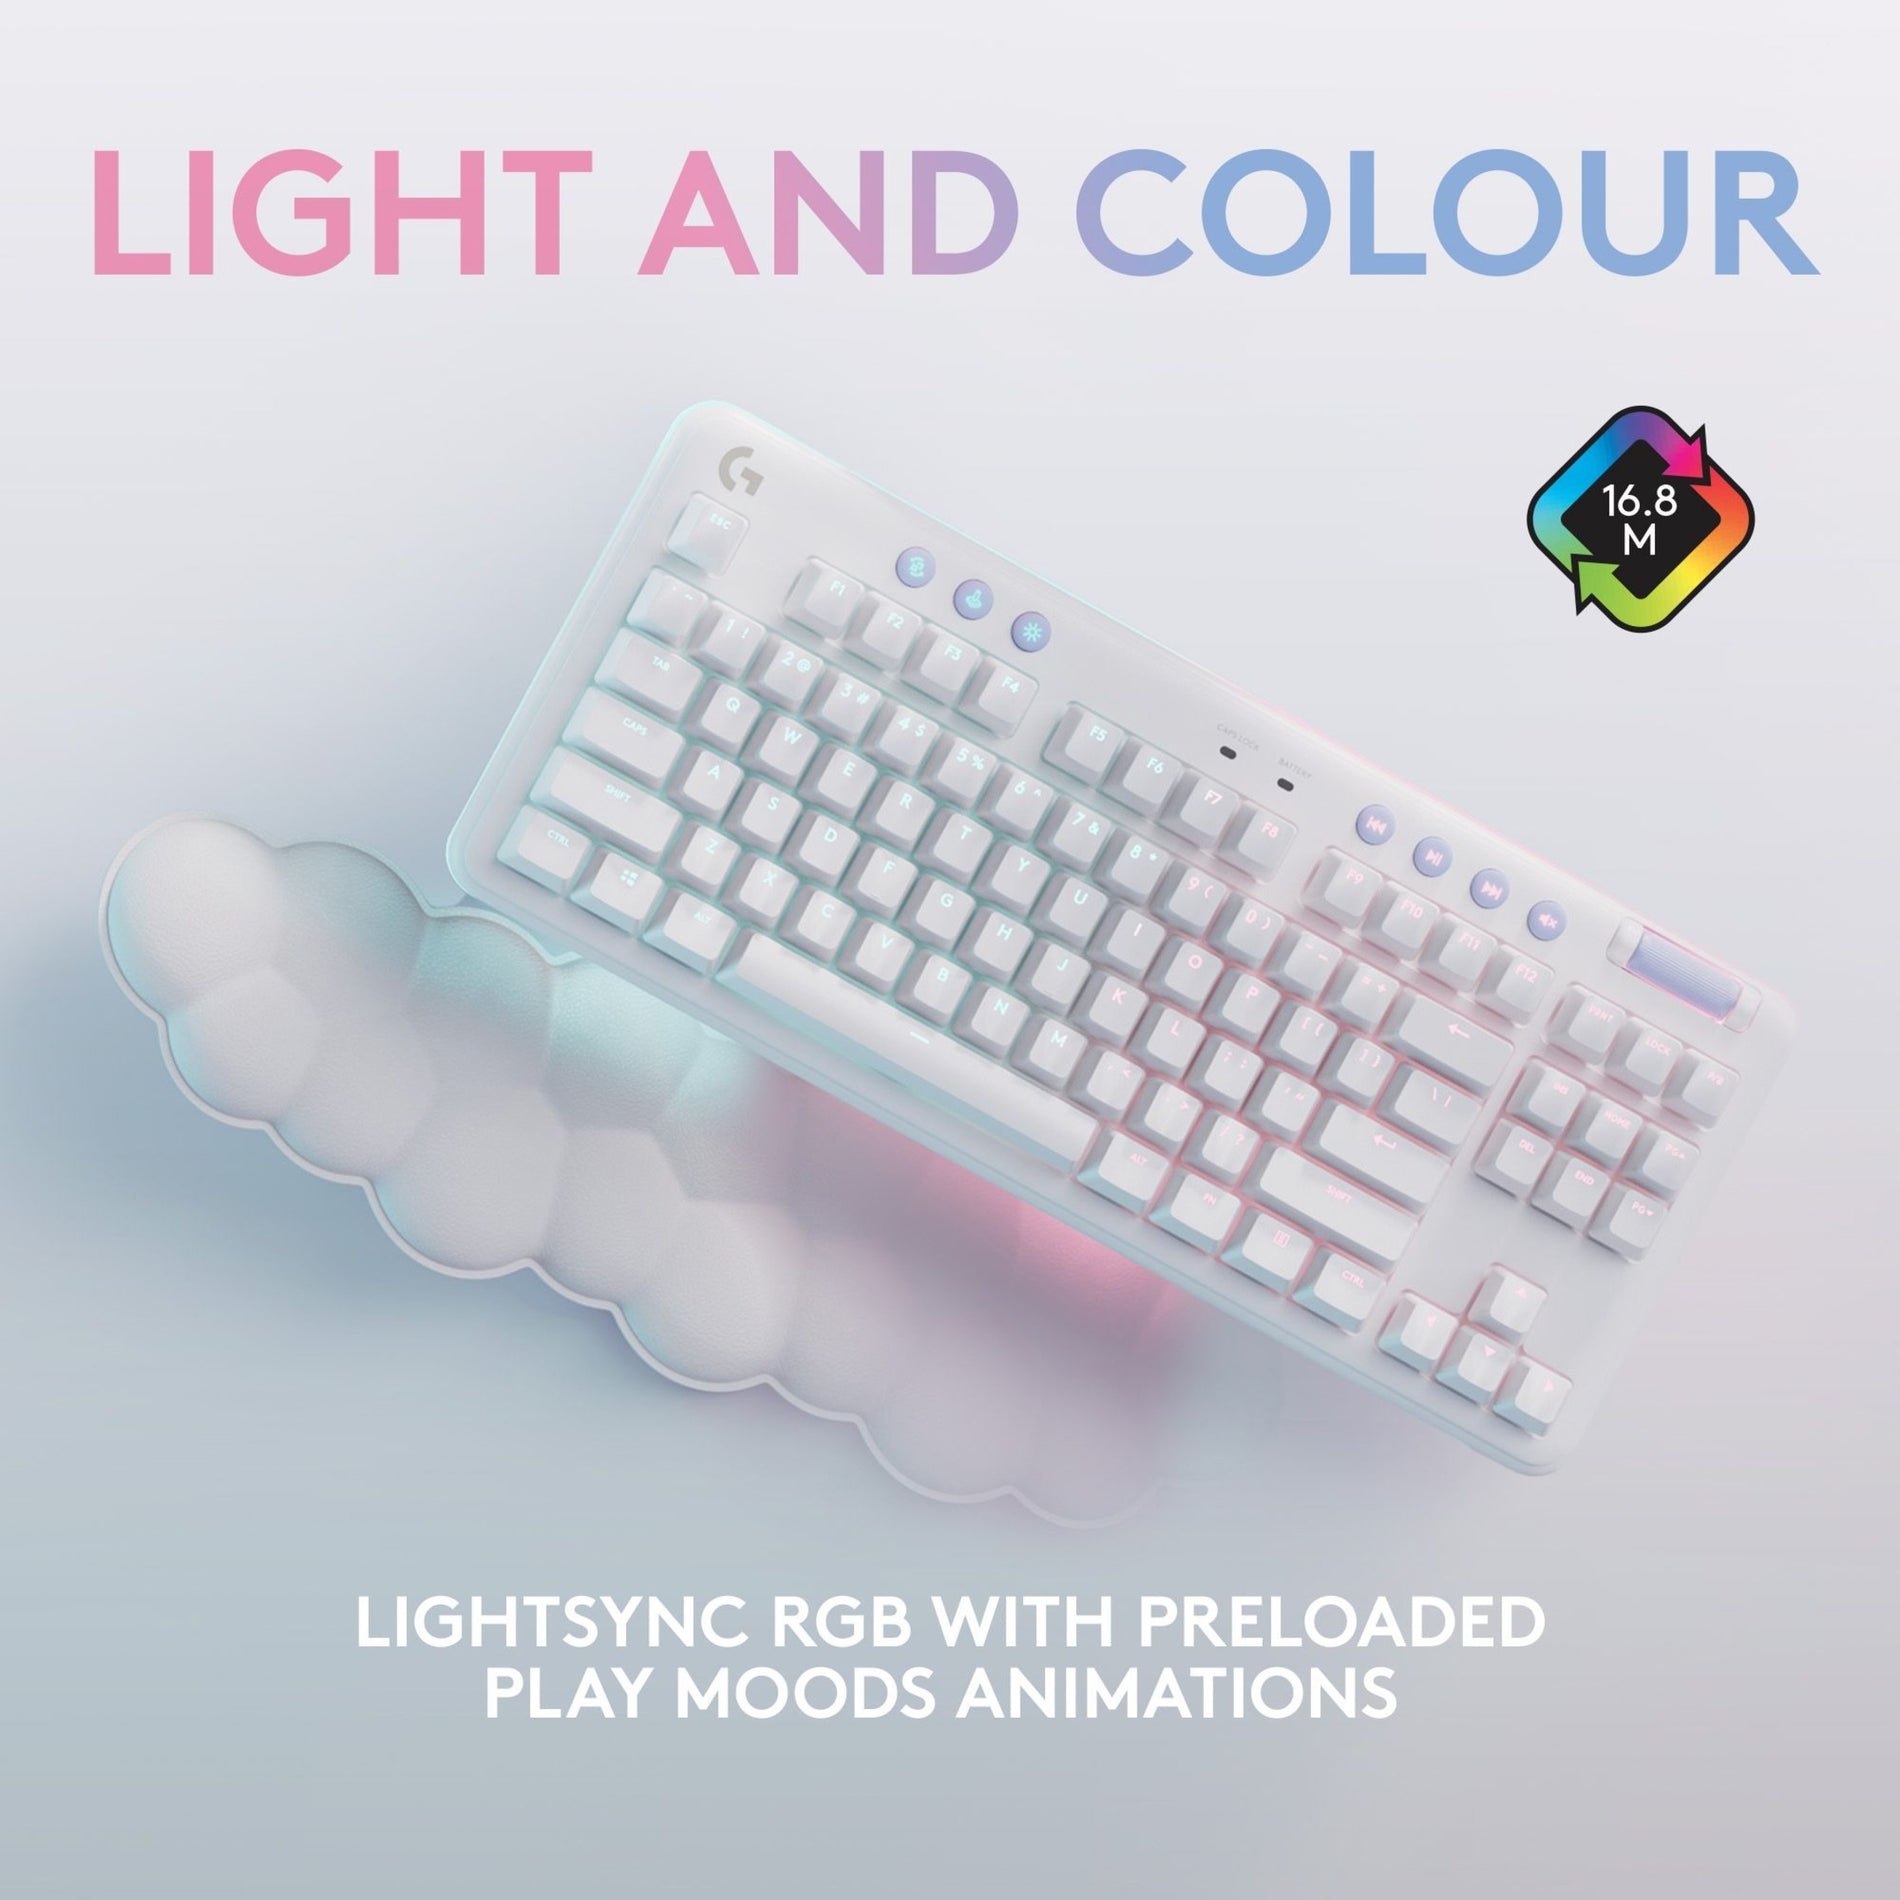 Logitech 920-010453 G715 Gaming Keyboard, RGB LED Backlight, Wireless Bluetooth